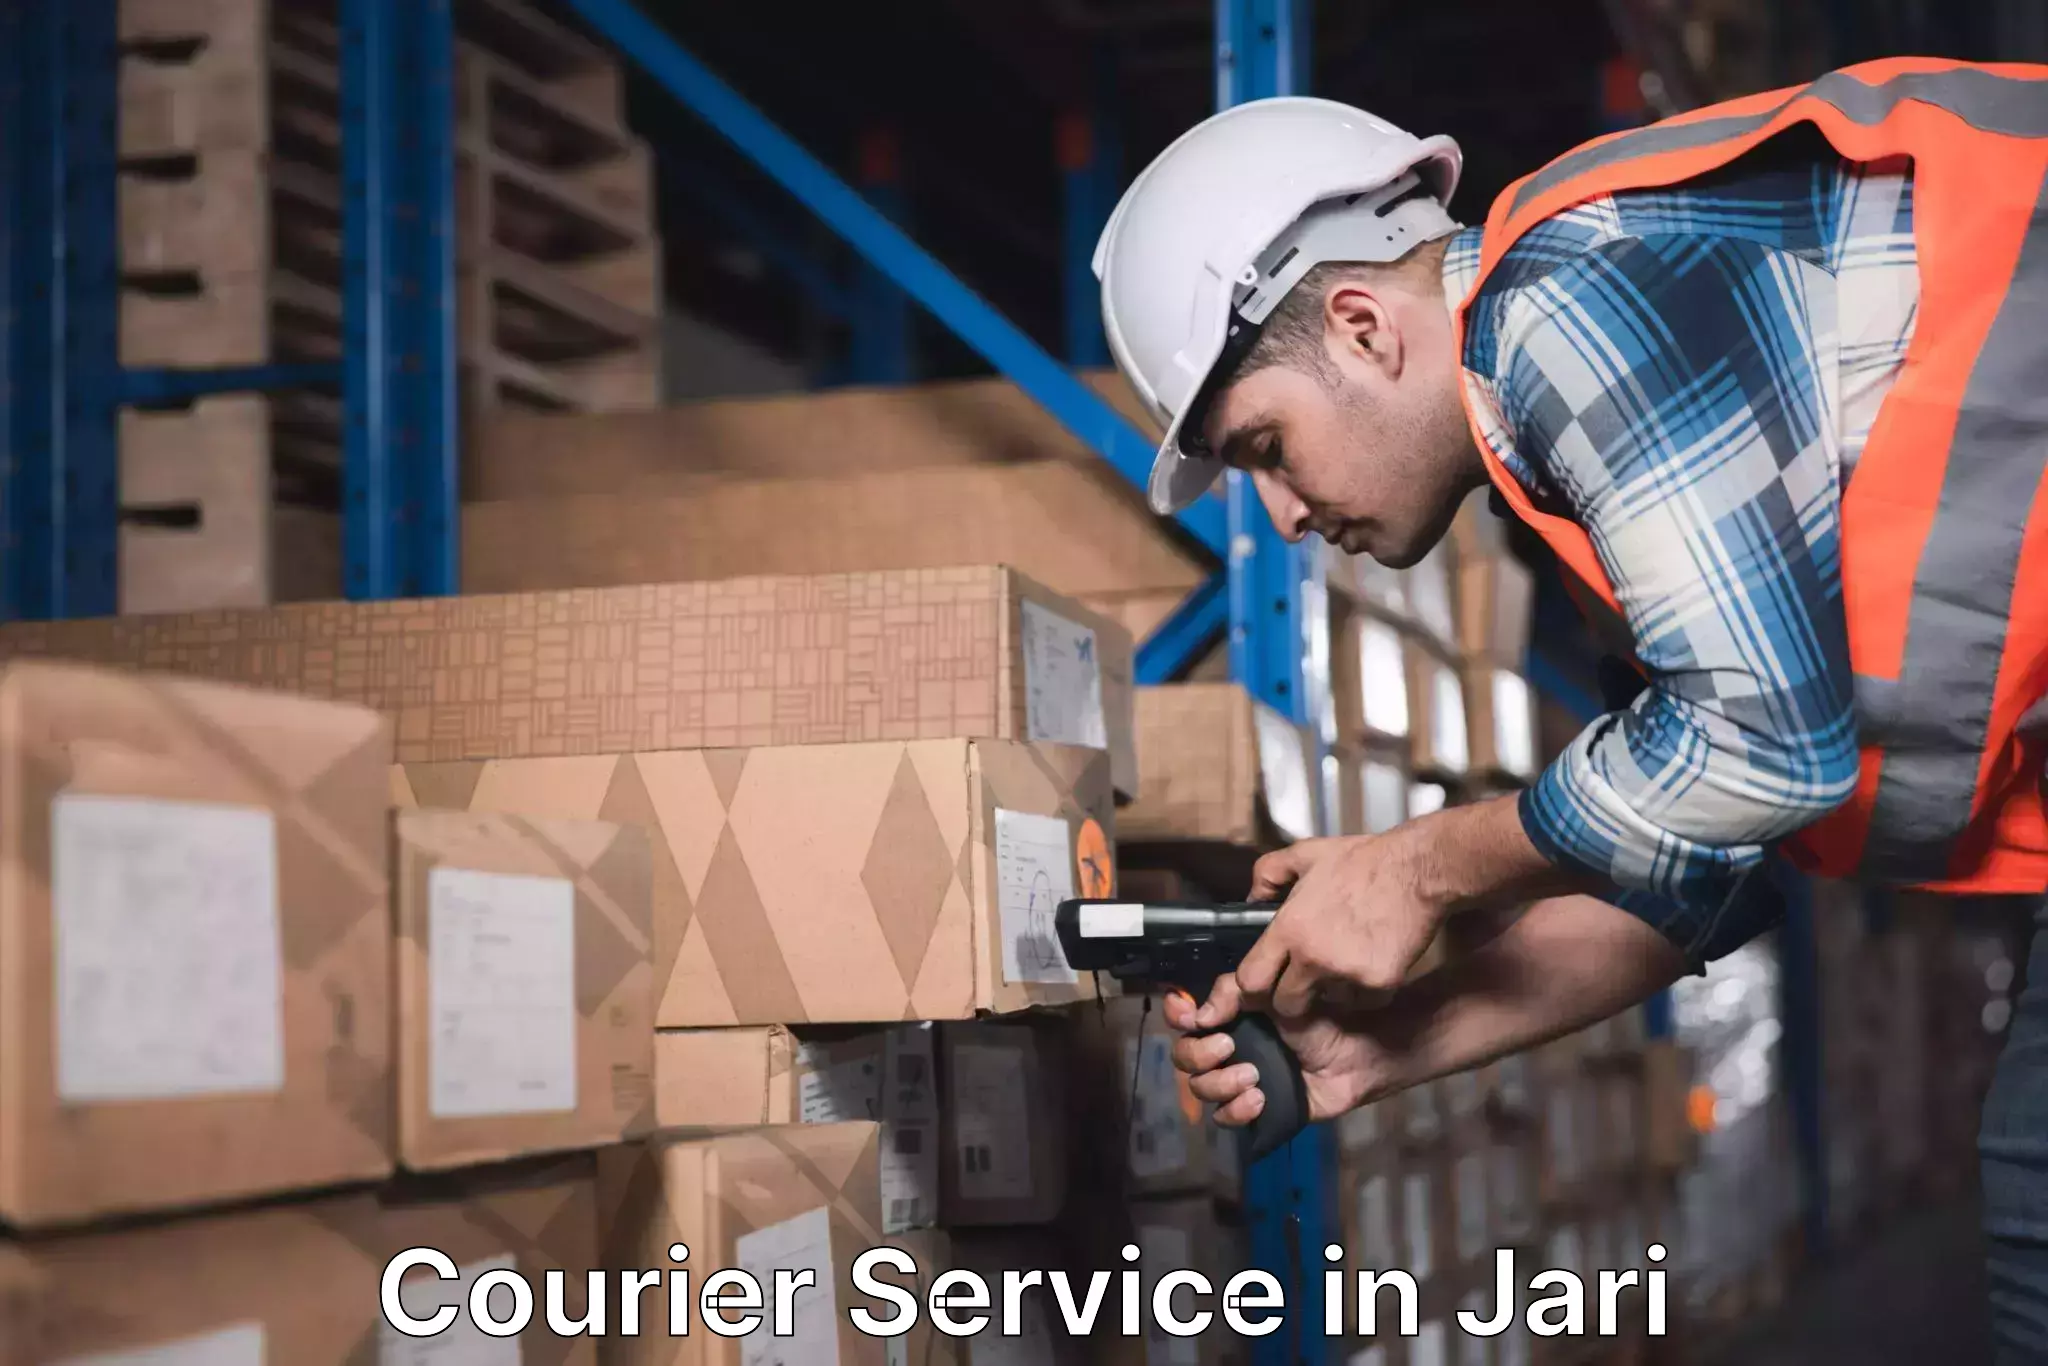 Courier insurance in Jari